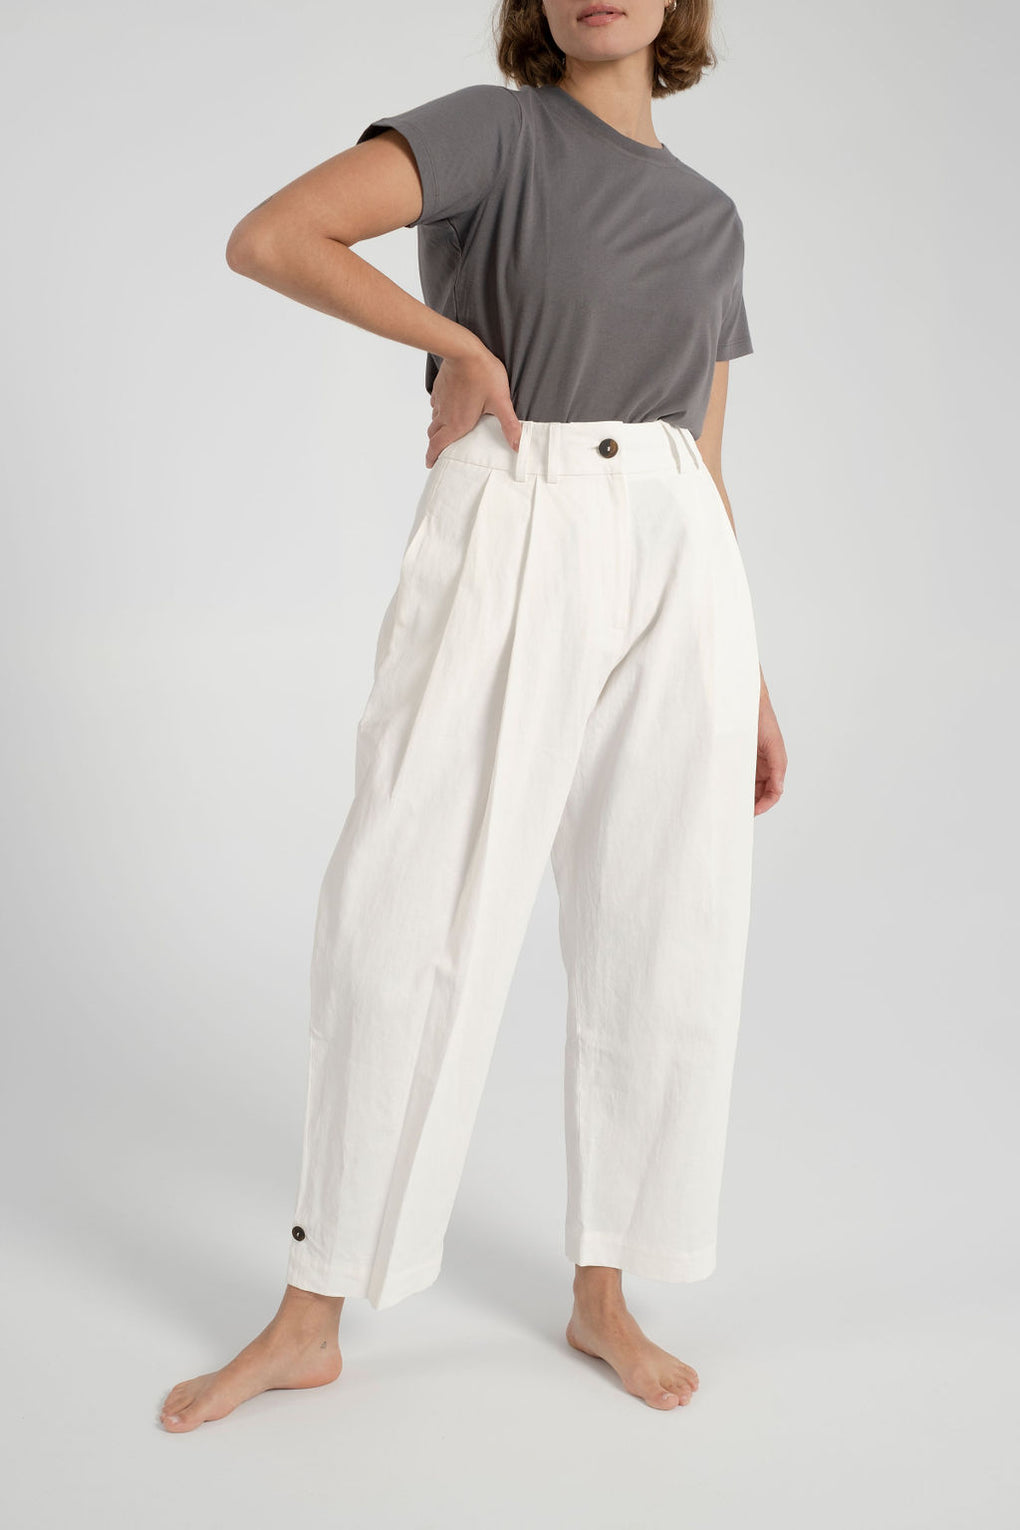 Studio Nicholson-Bag Pants-white linen pants-Idun-St. Paul